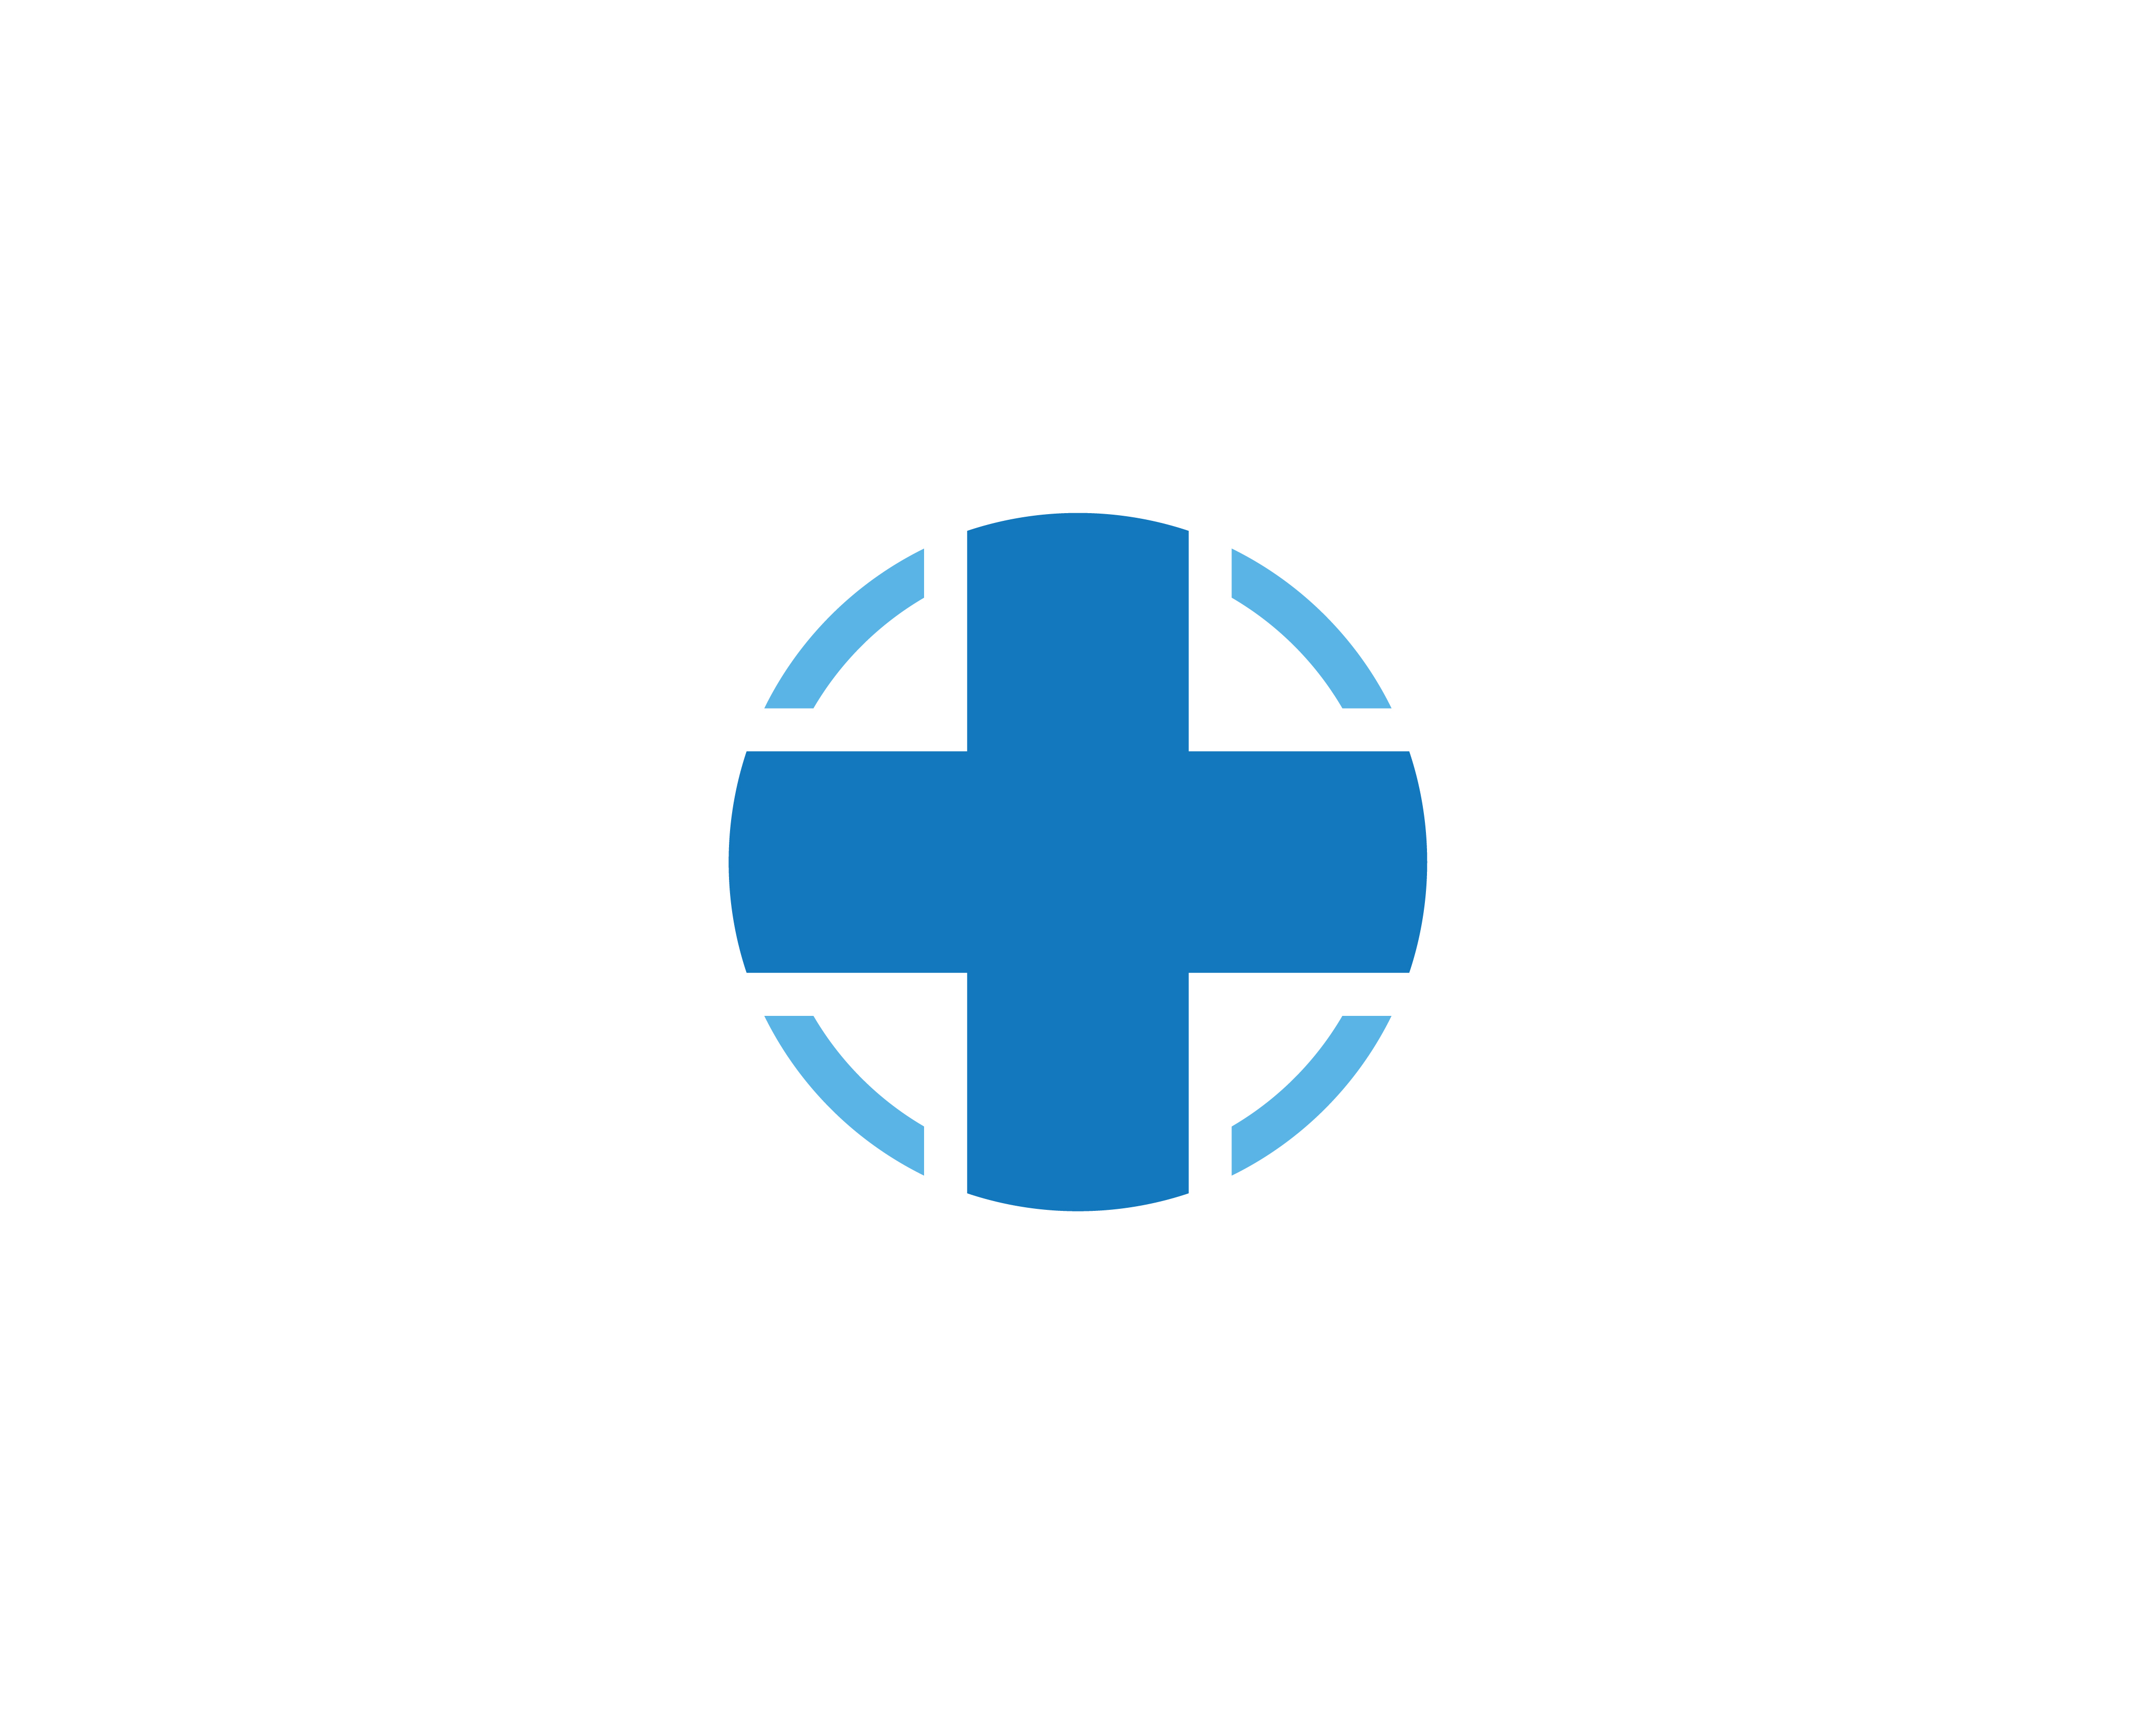 Green Plus Medical 3d Symbol Logo Vector Stock Vector - Illustration of  icon, doctor: 179938426